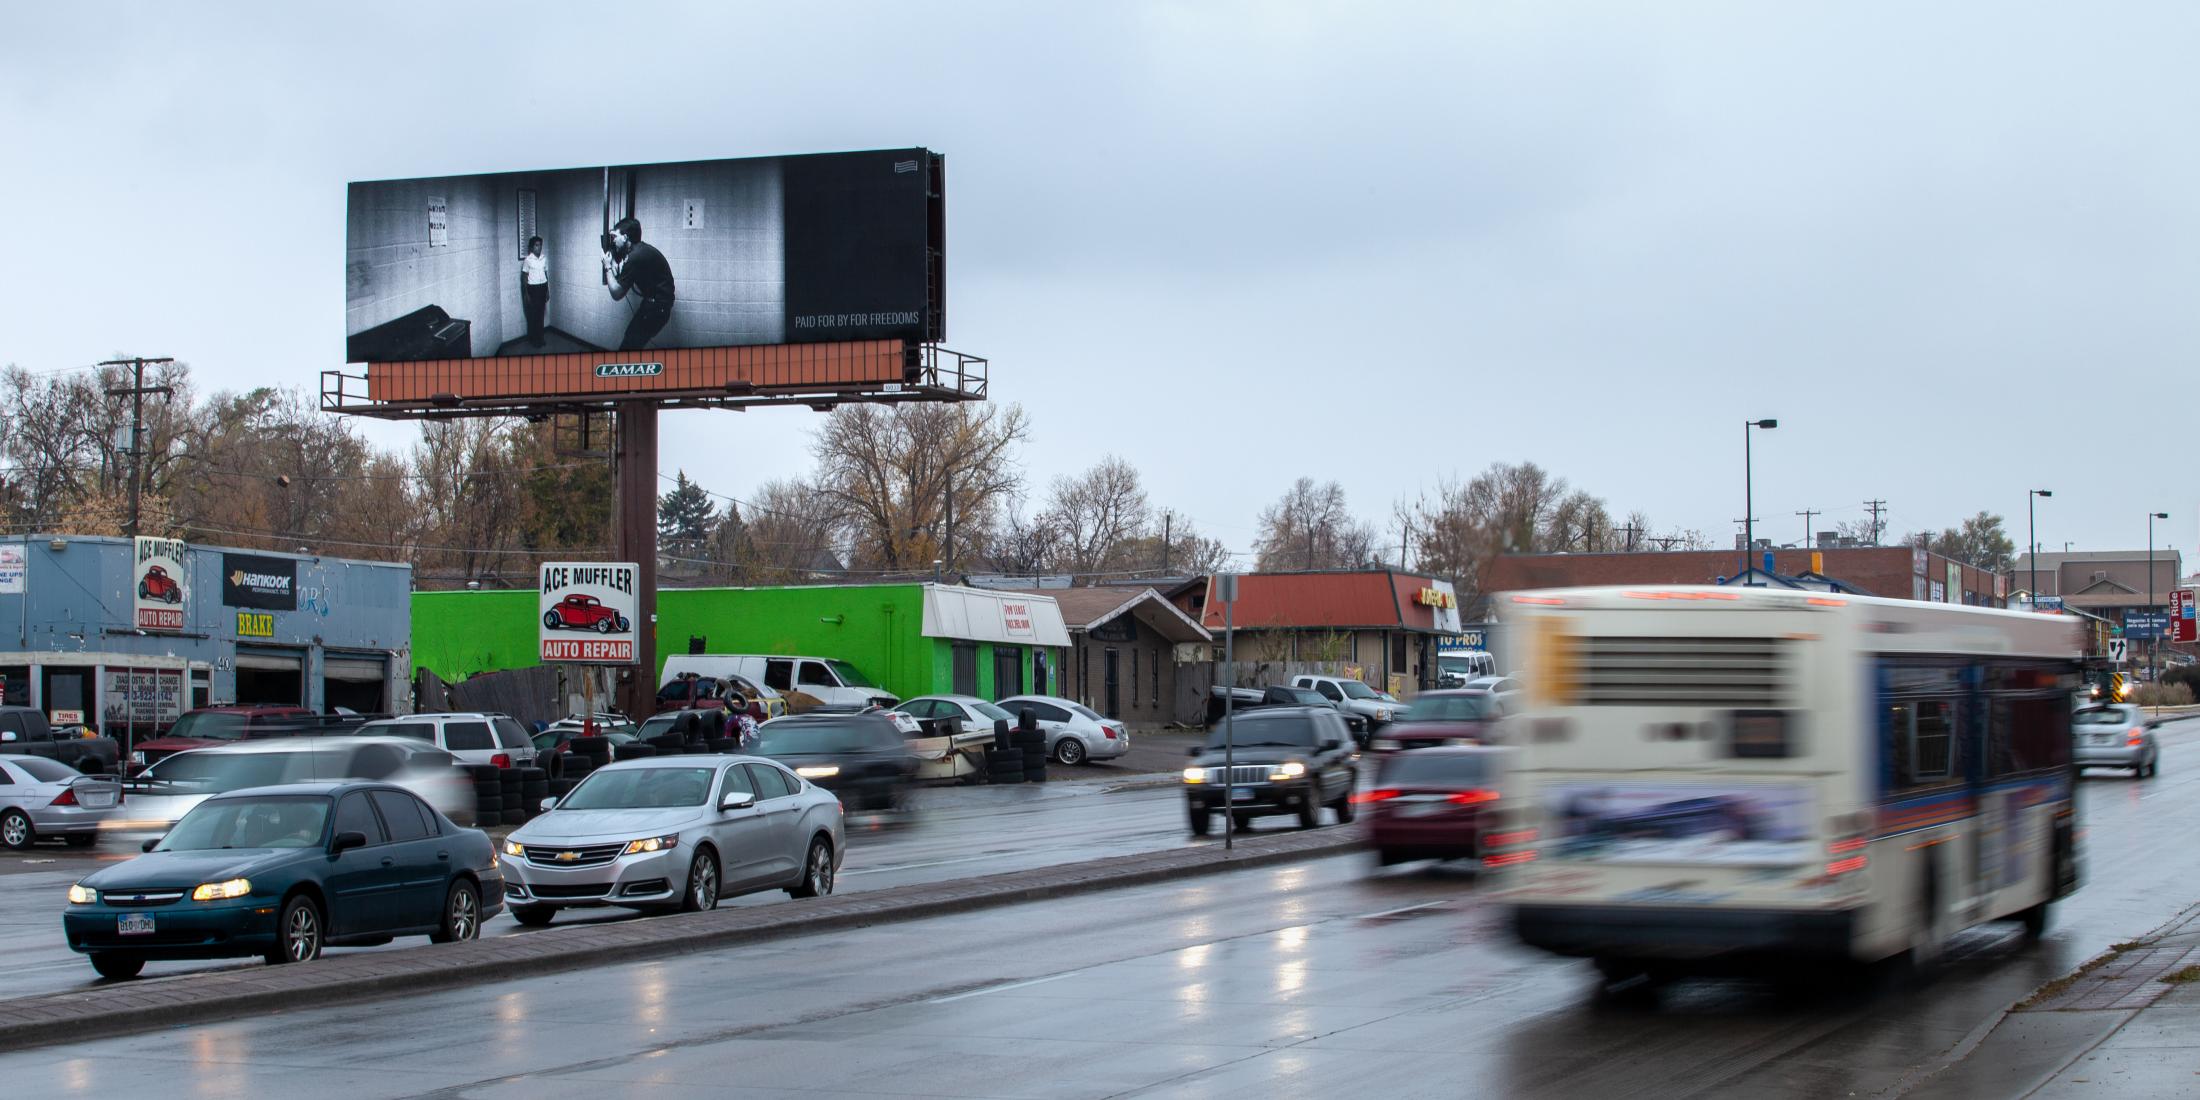 For Freedoms billboard installed on Federal Blvd in Denver, Colorado. Image courtesy Jeff Scroggins.